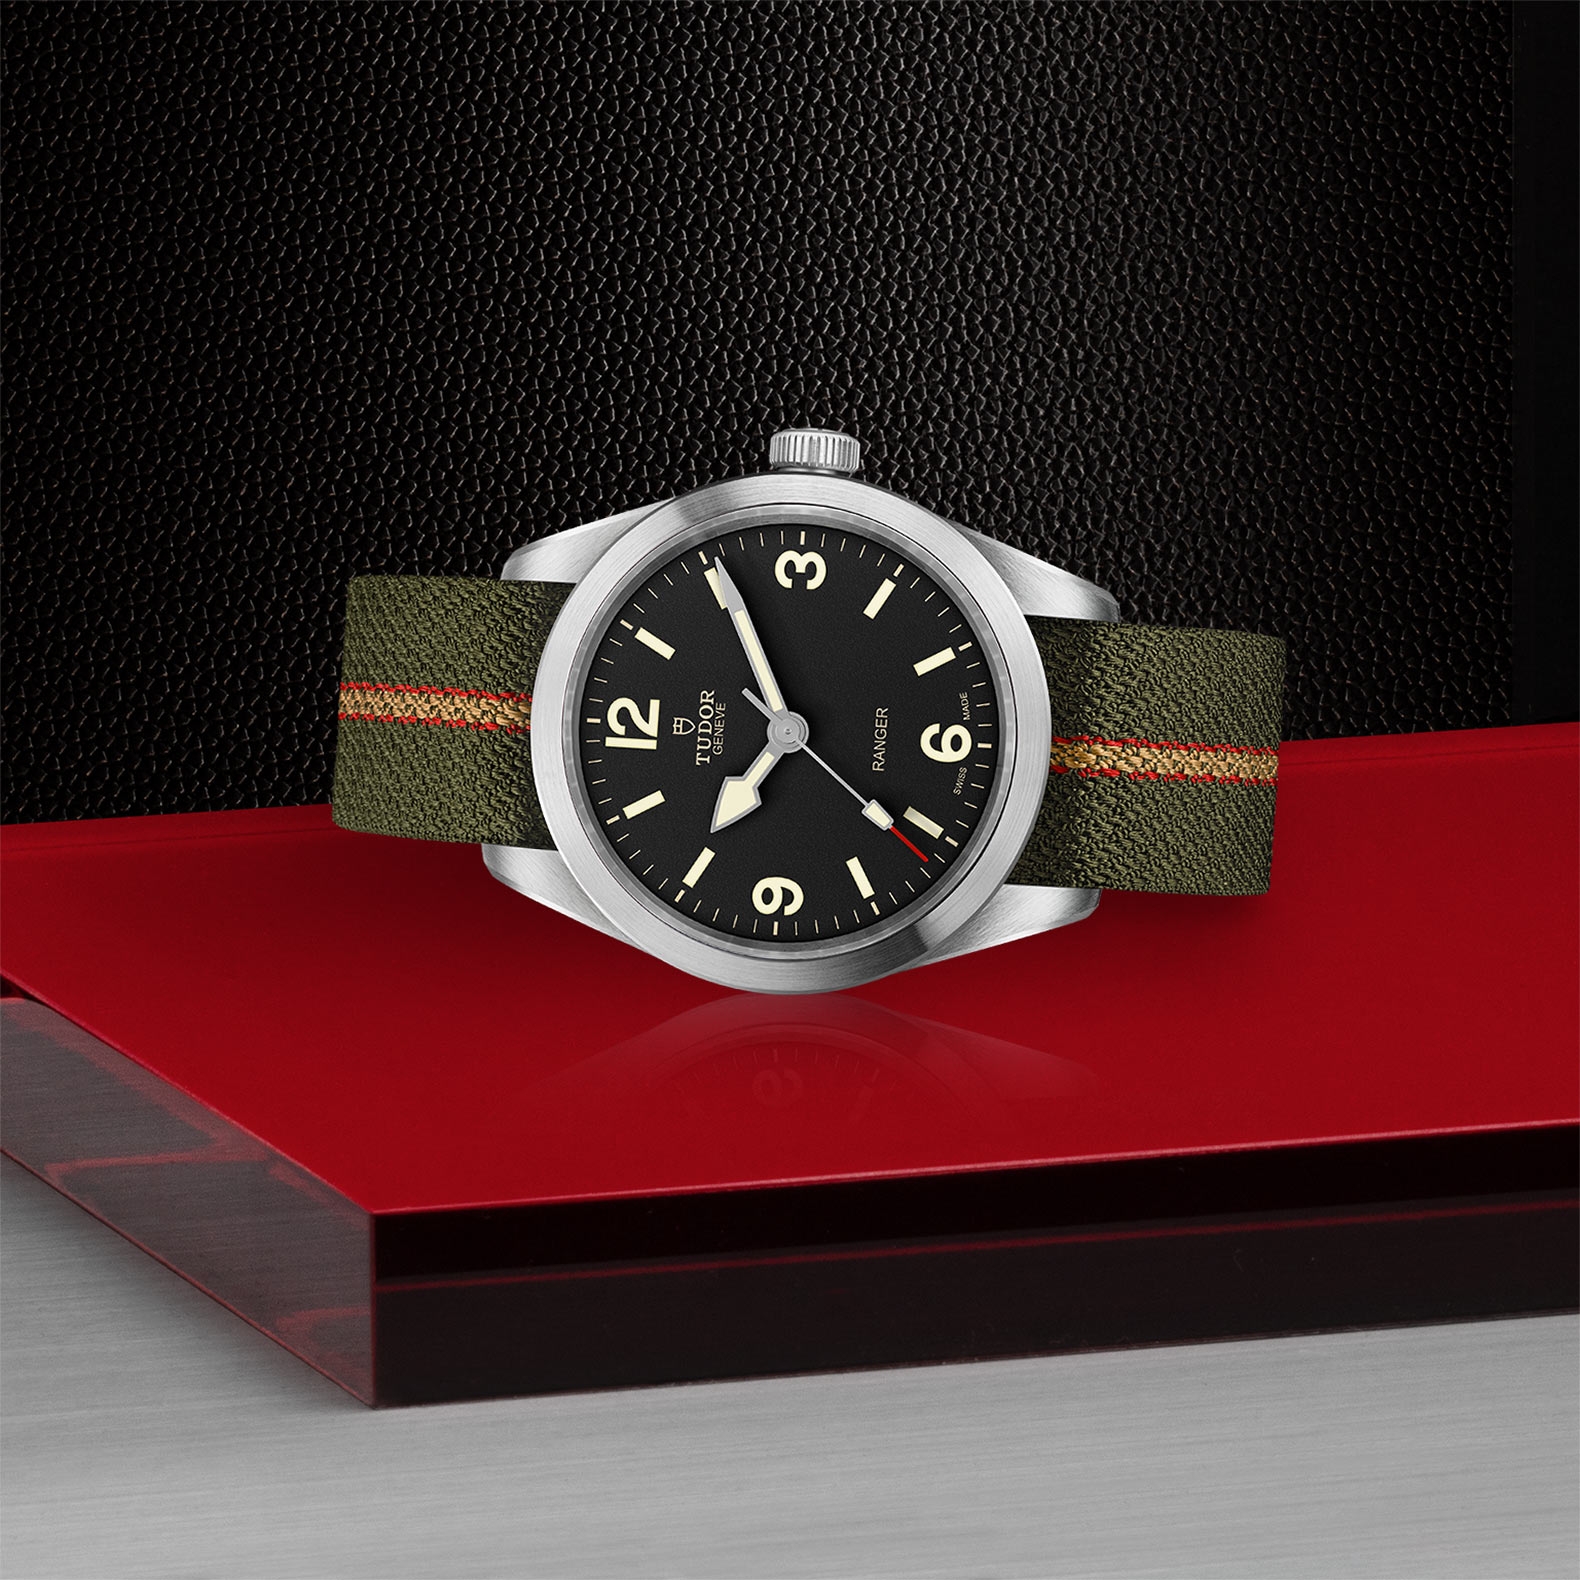 Tudor Ranger  - M79950-0003 | Europe Watch Company